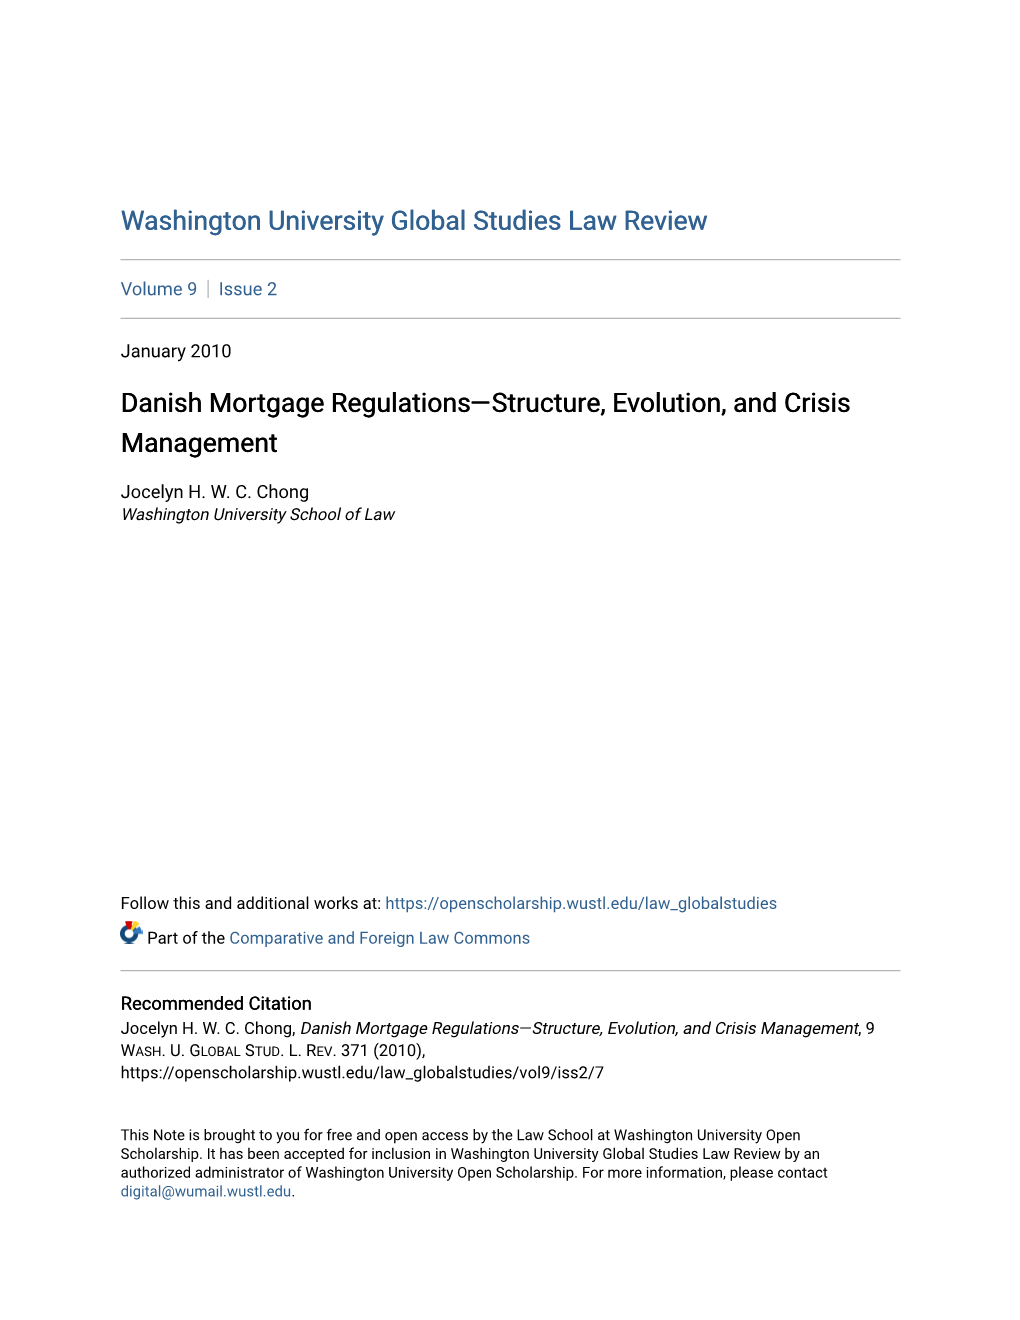 Danish Mortgage Regulations—Structure, Evolution, and Crisis Management